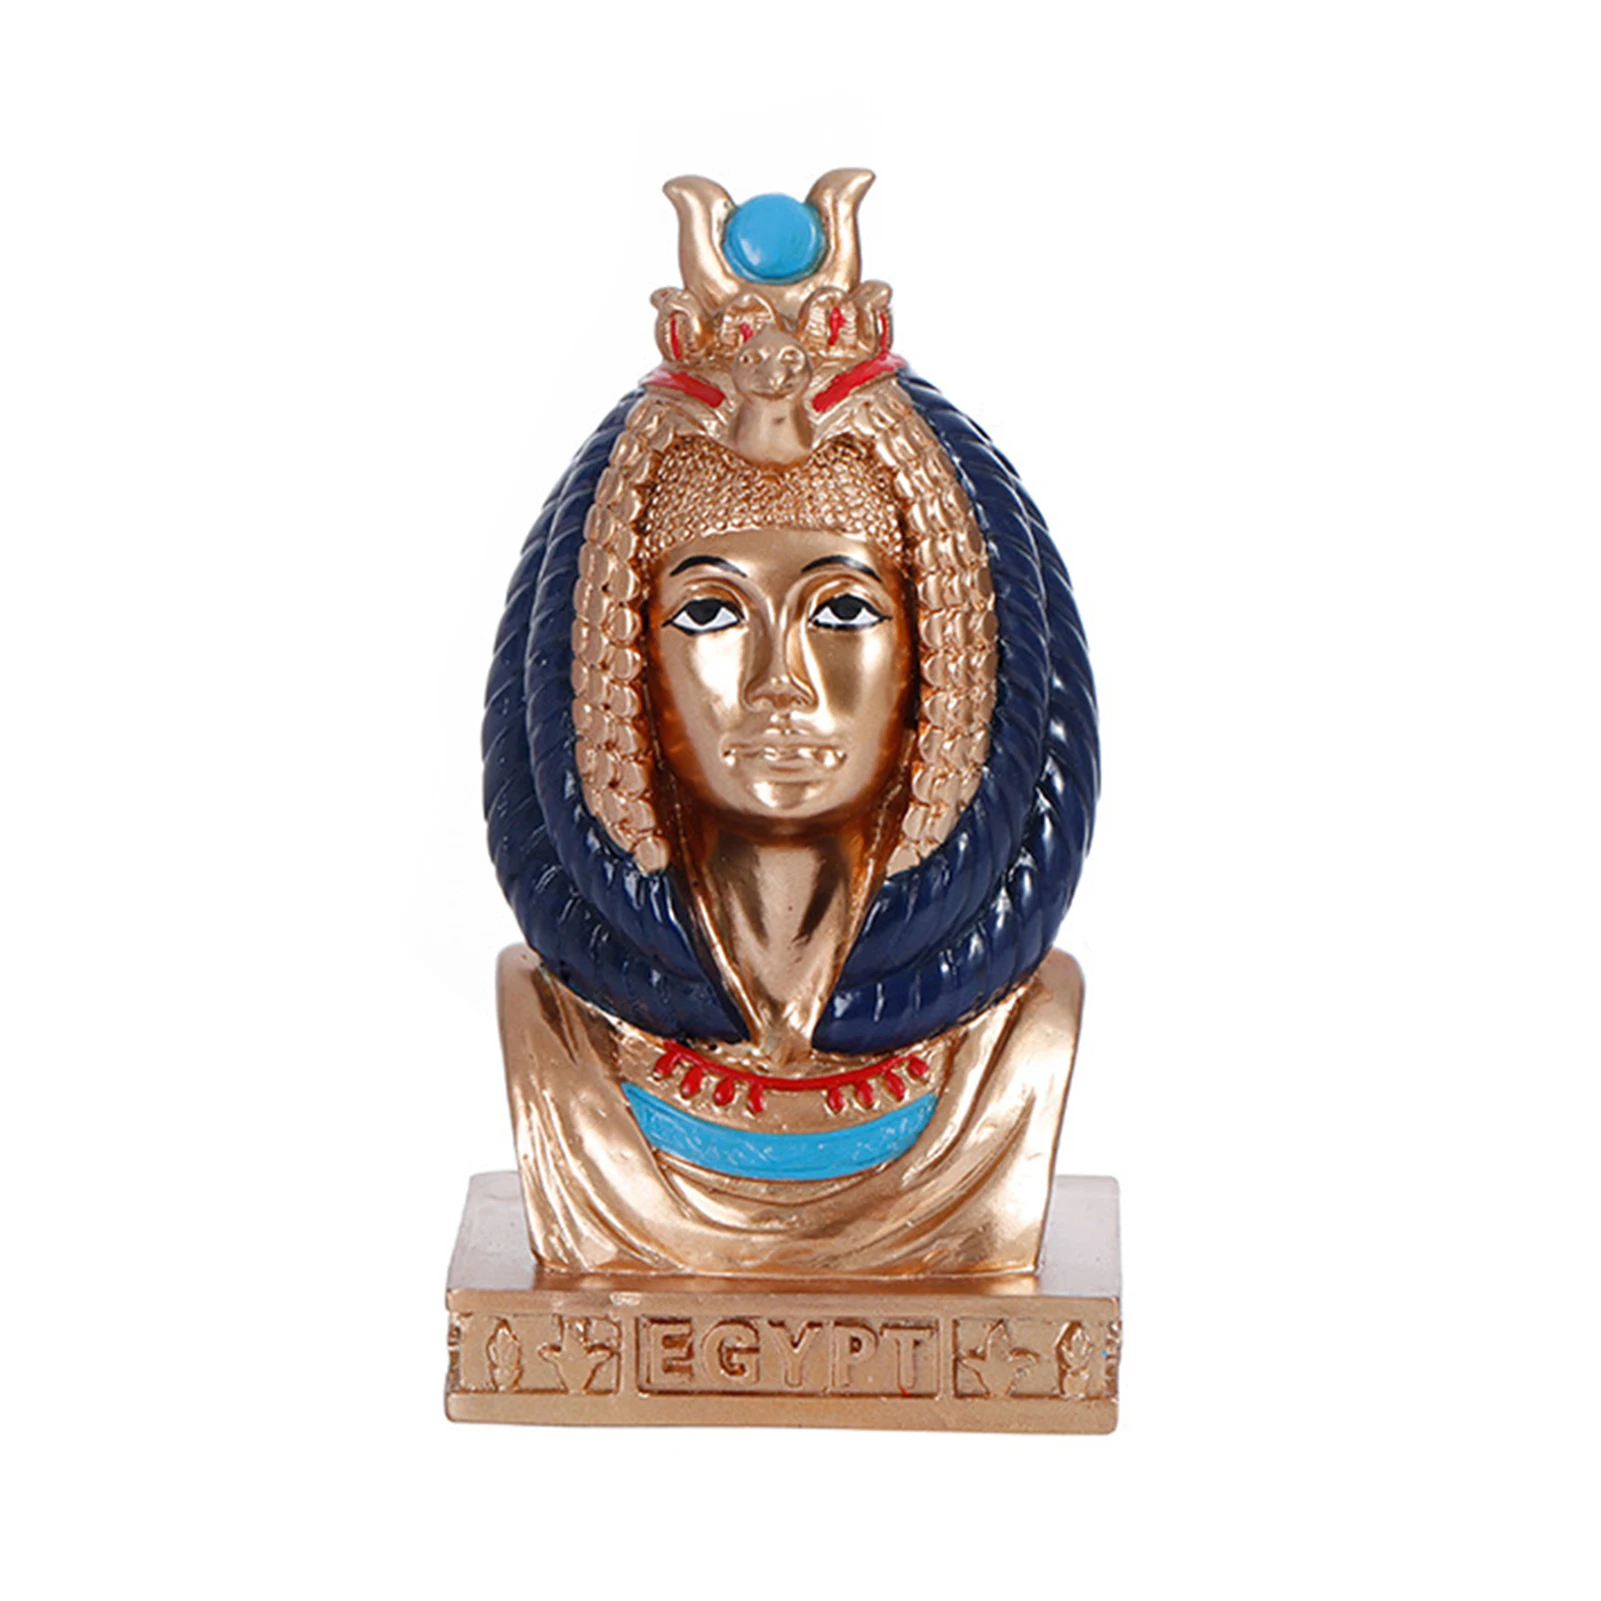 Nefertiti Sculpture Ancient Egyptian Queen Nefertiti Statue Egyptian Decor Folk Art Artificial Egypt Figurine Resin Craft Home